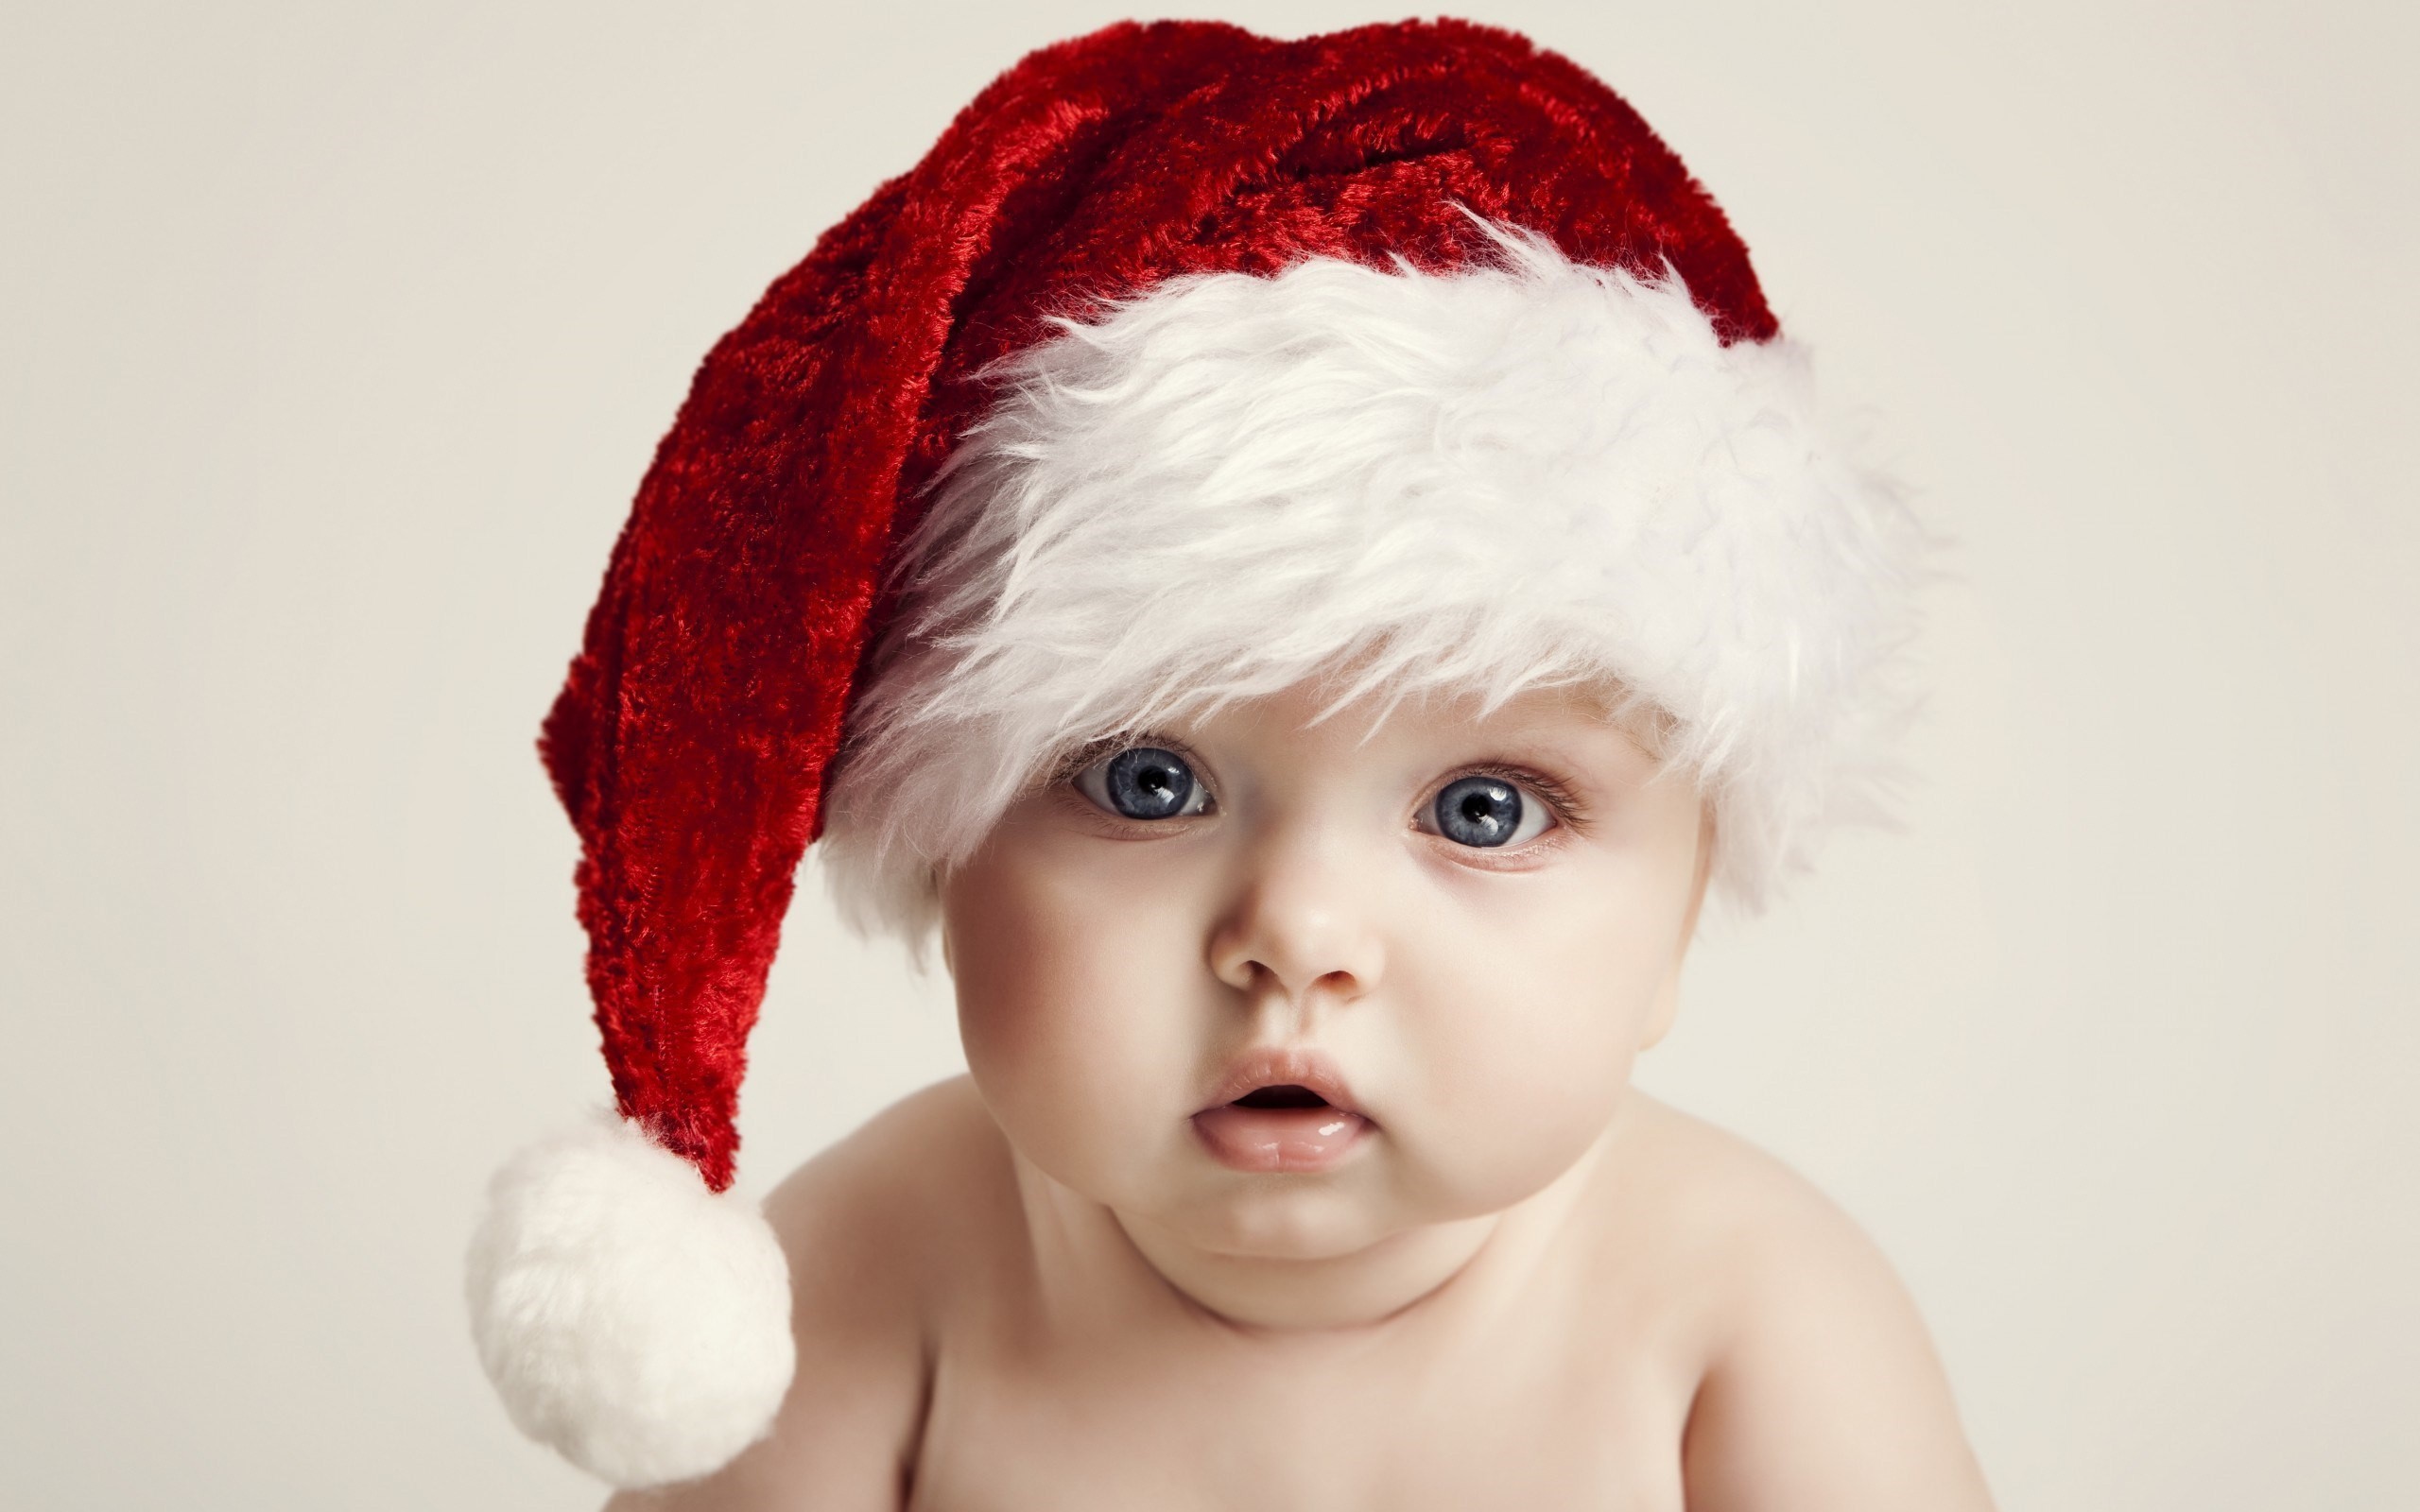 Cute Christmas Baby Boy HD Wallpaper New